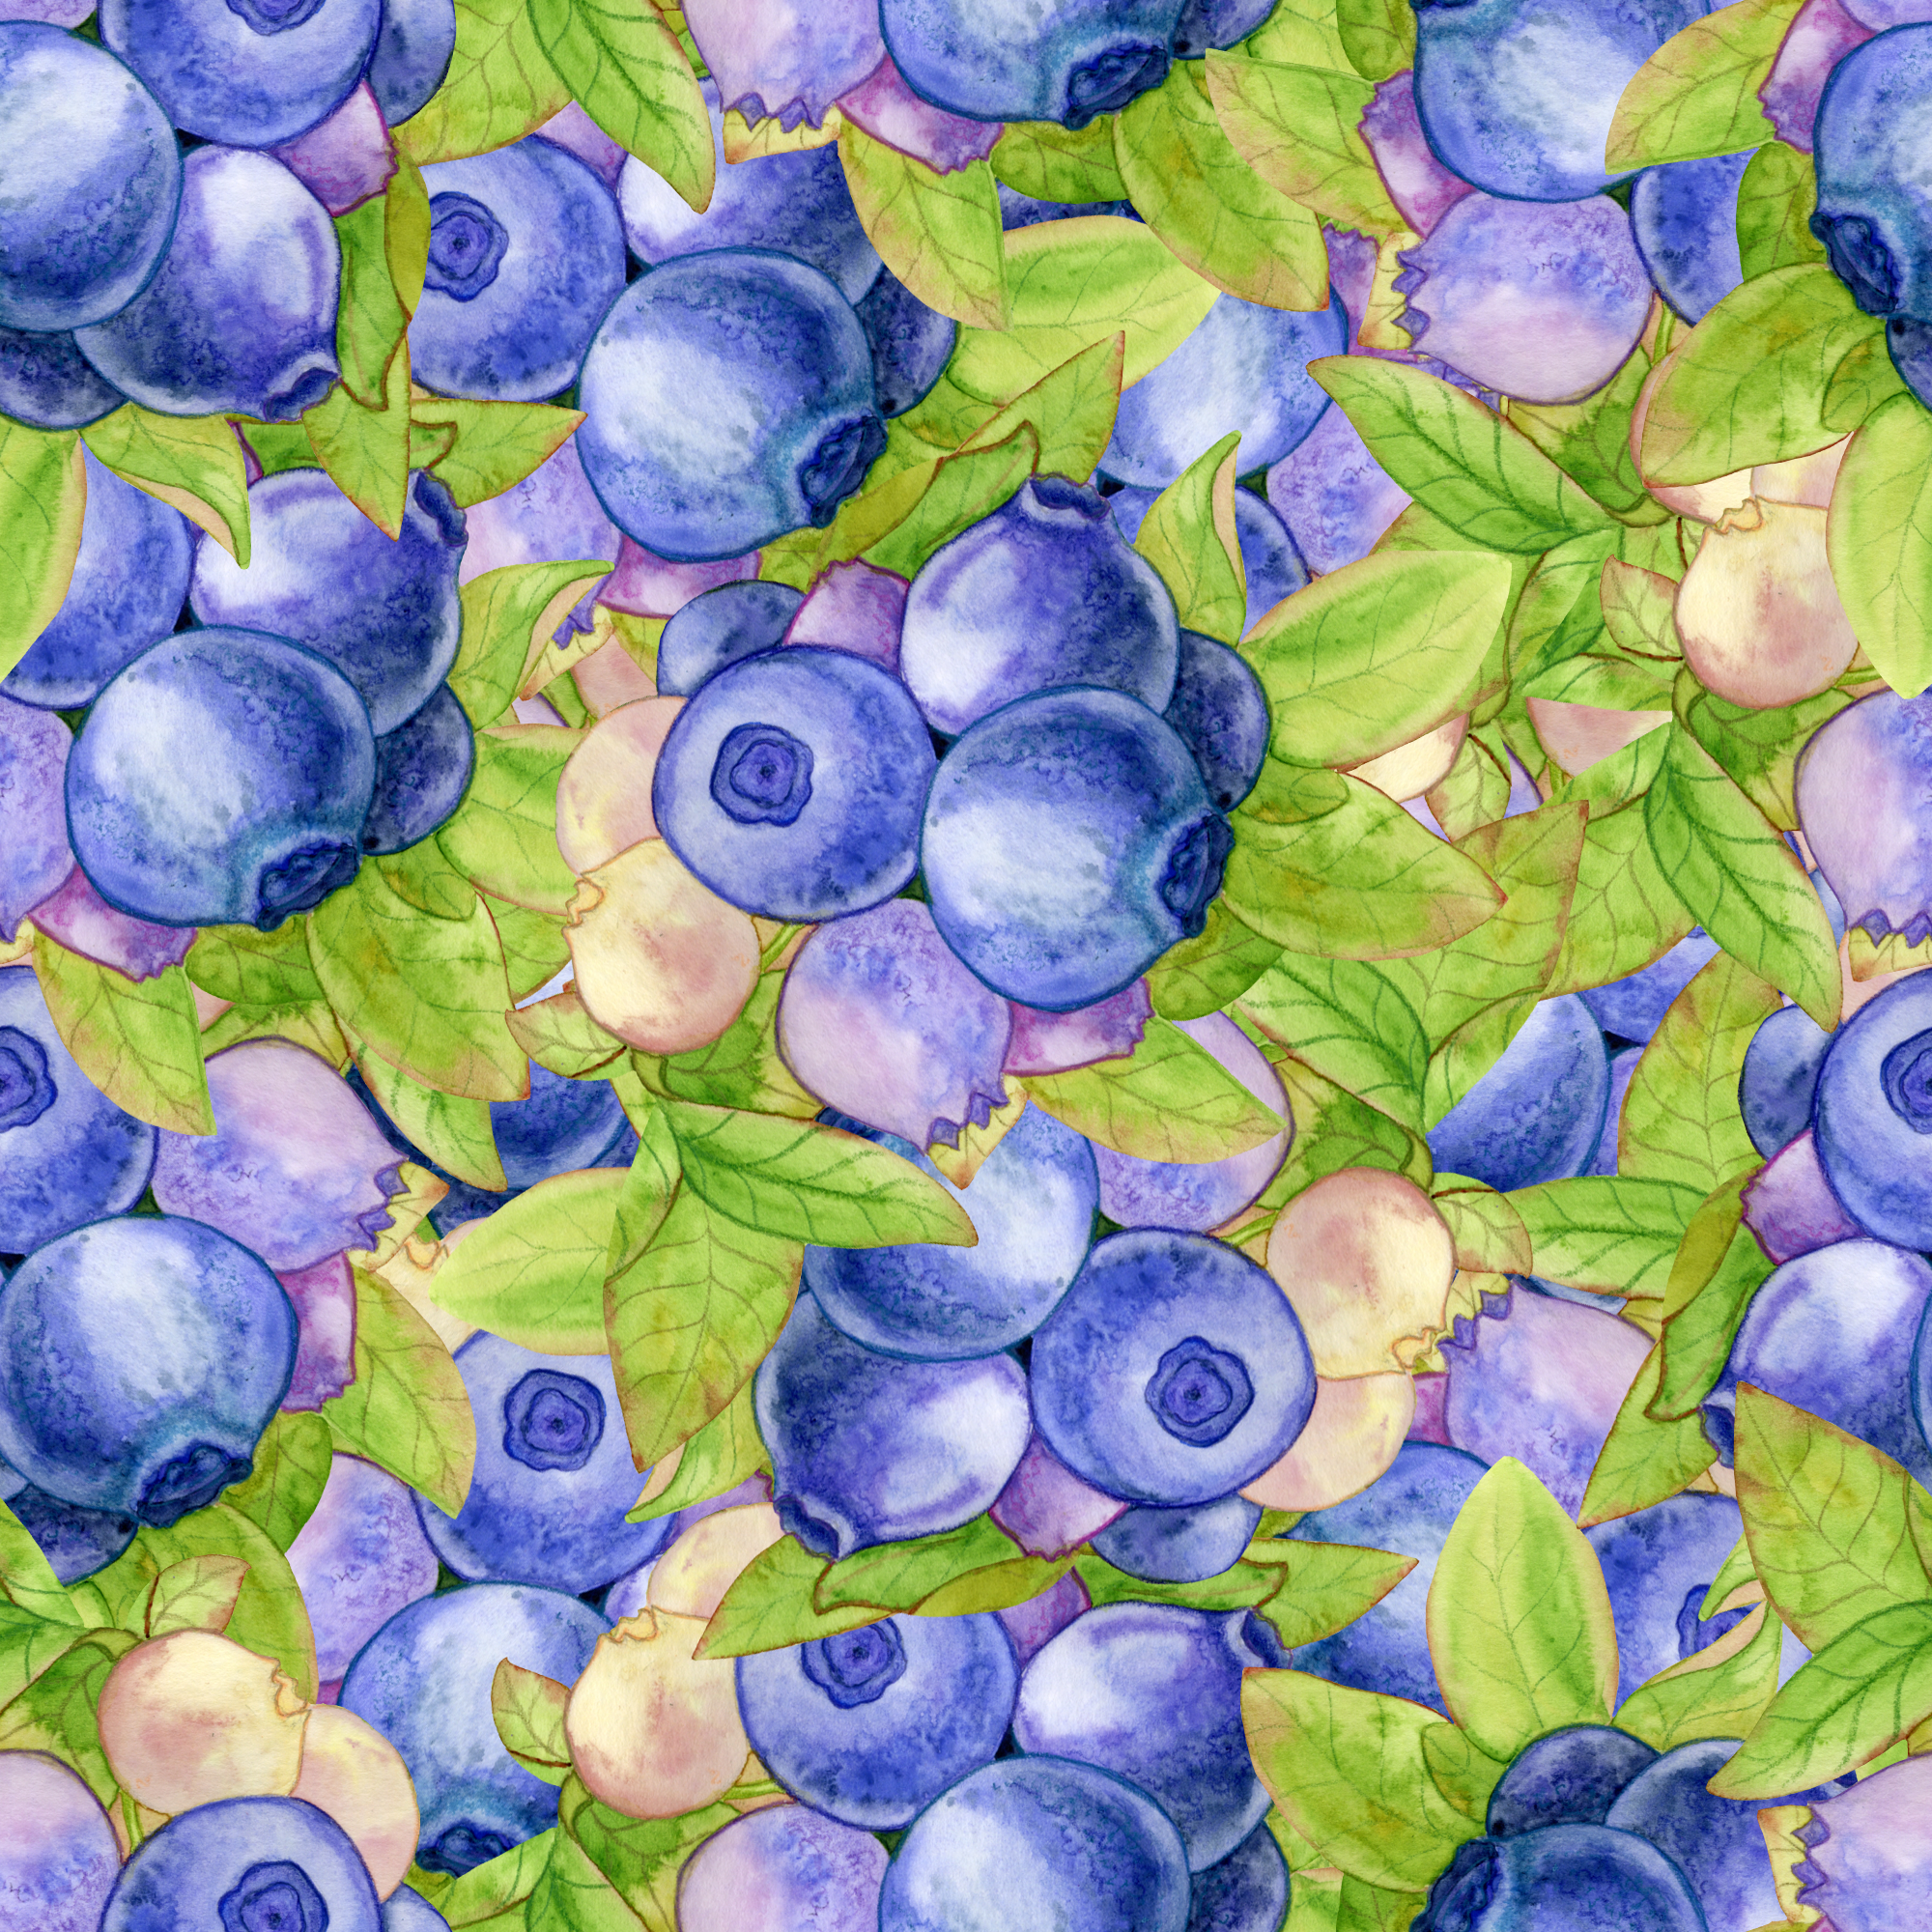 Blueberry pattern